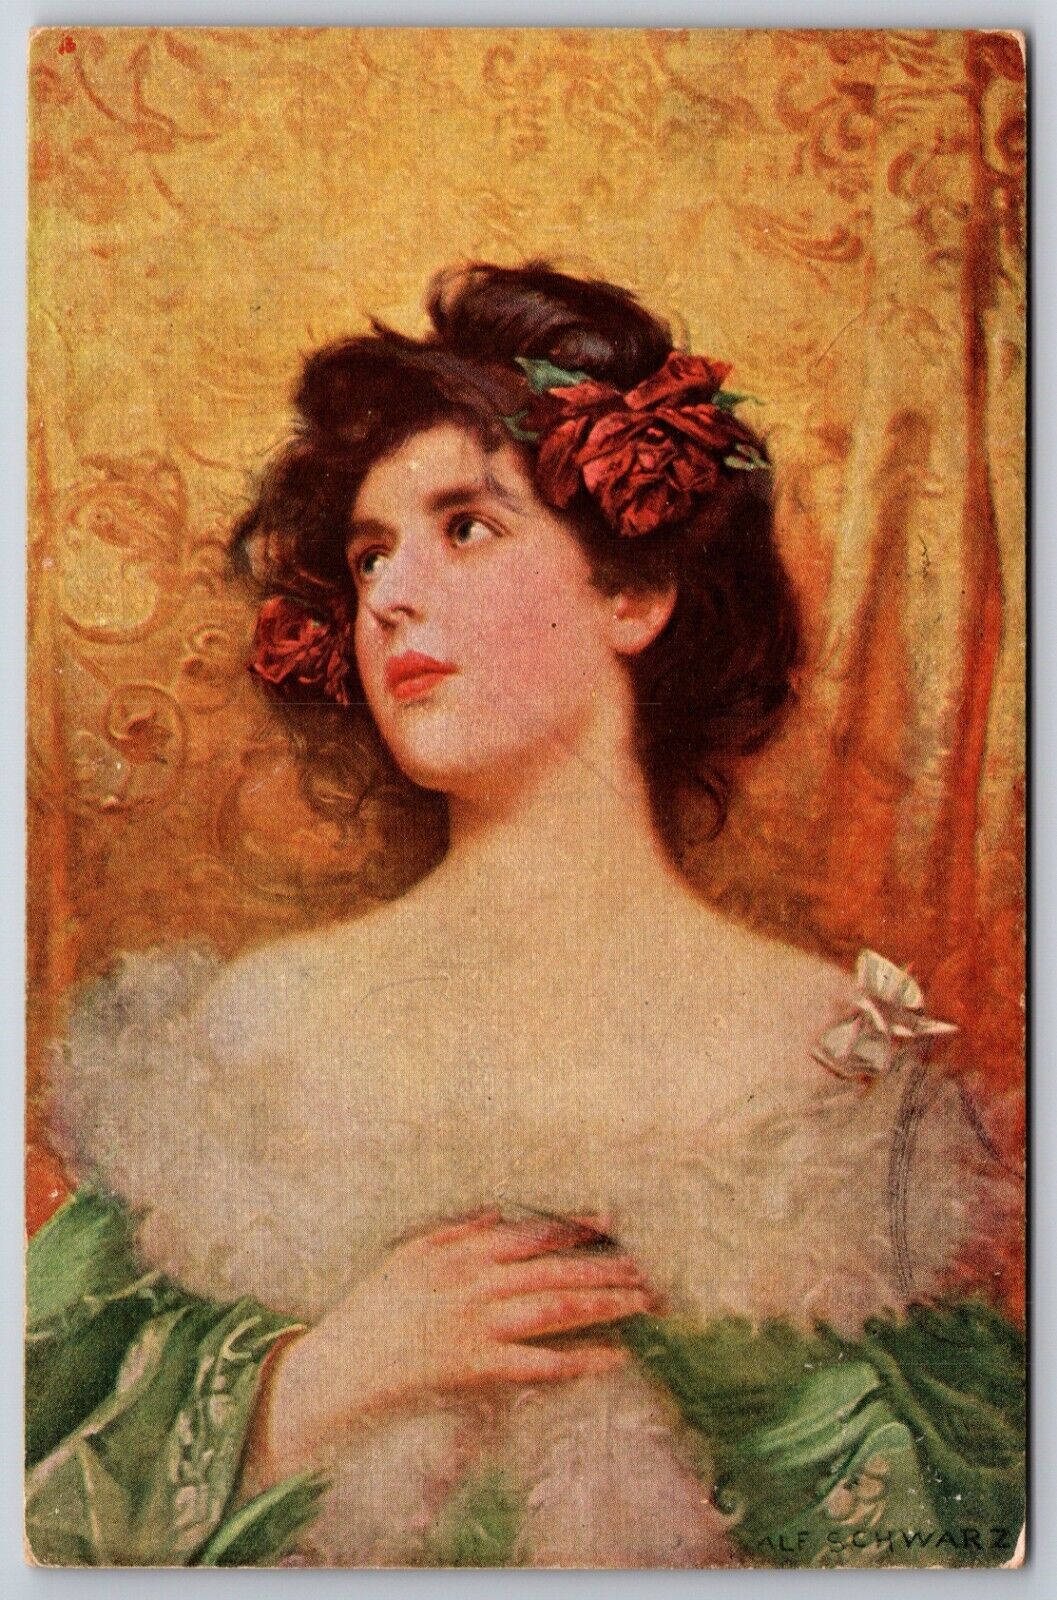 Alfred Schwarz Artist Signed Portrait of Woman 1920 DB Postcard G15